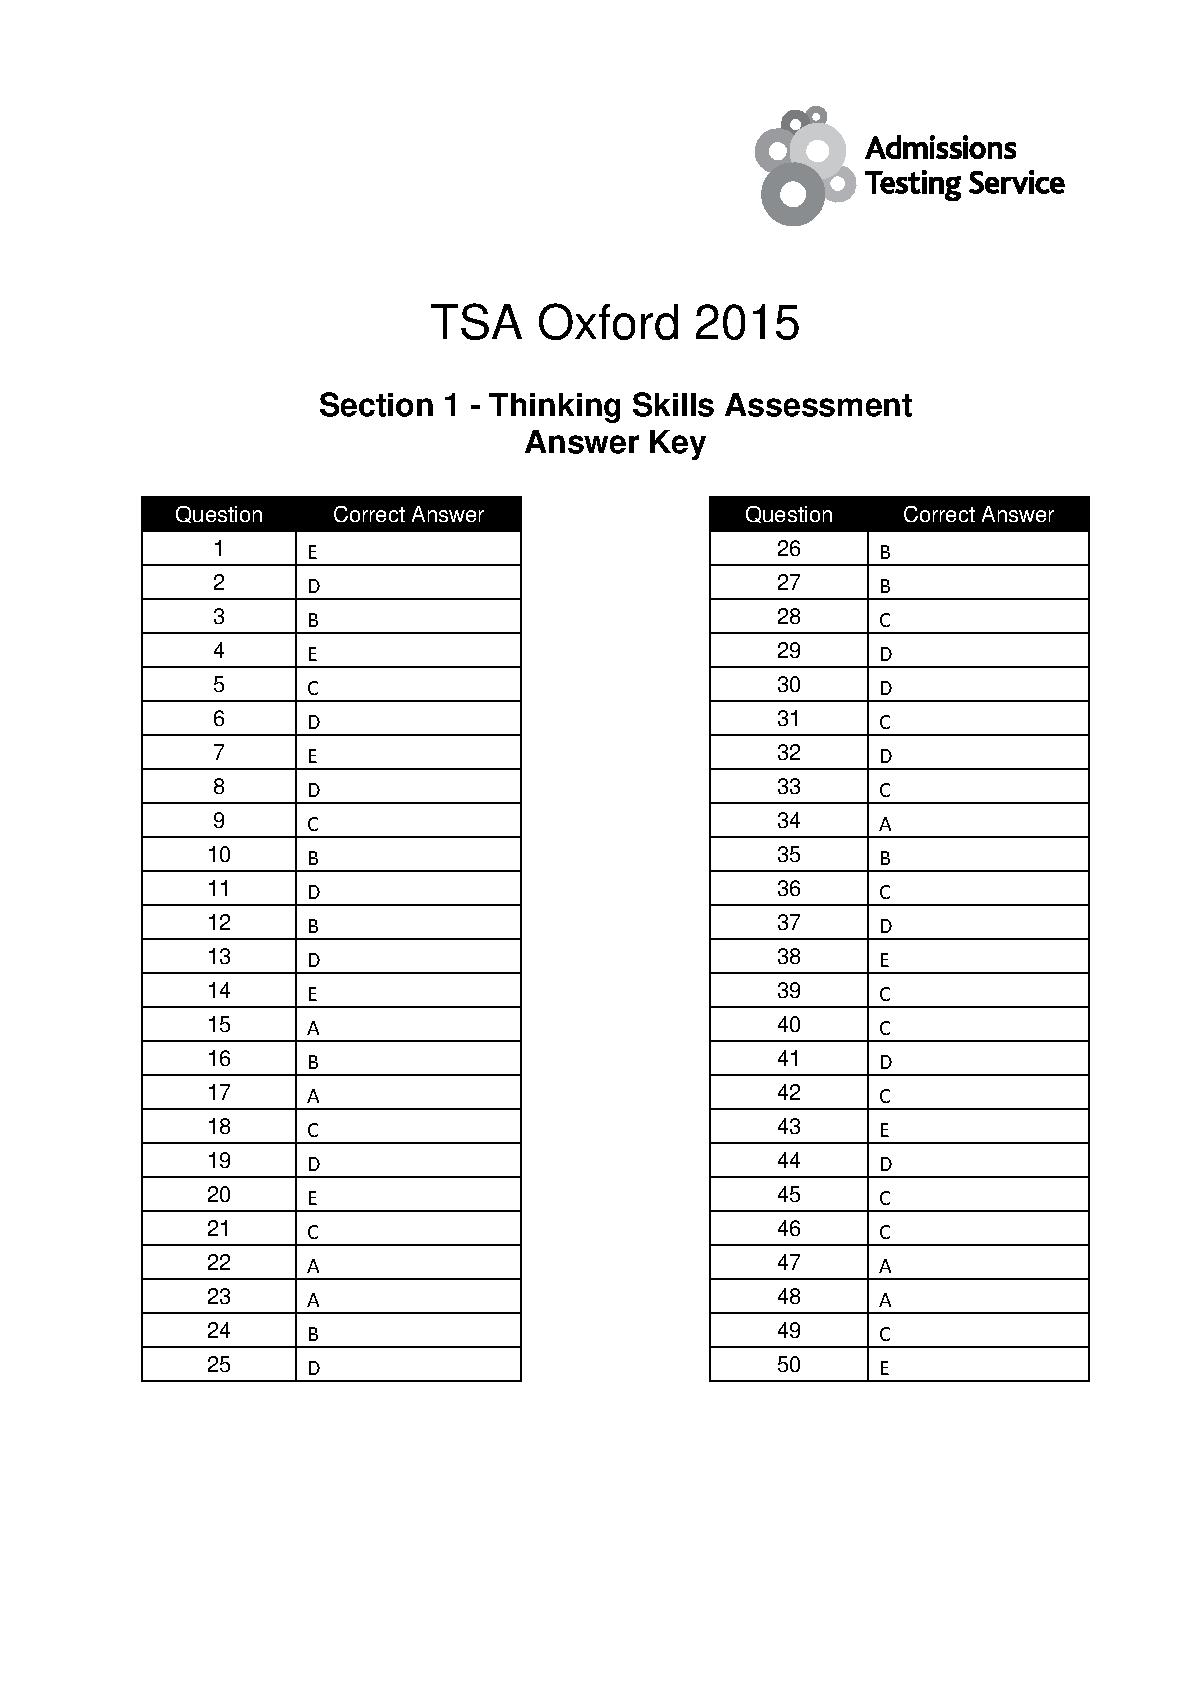 TSA Oxford 2015 Section 1 Answer Key PDF Host